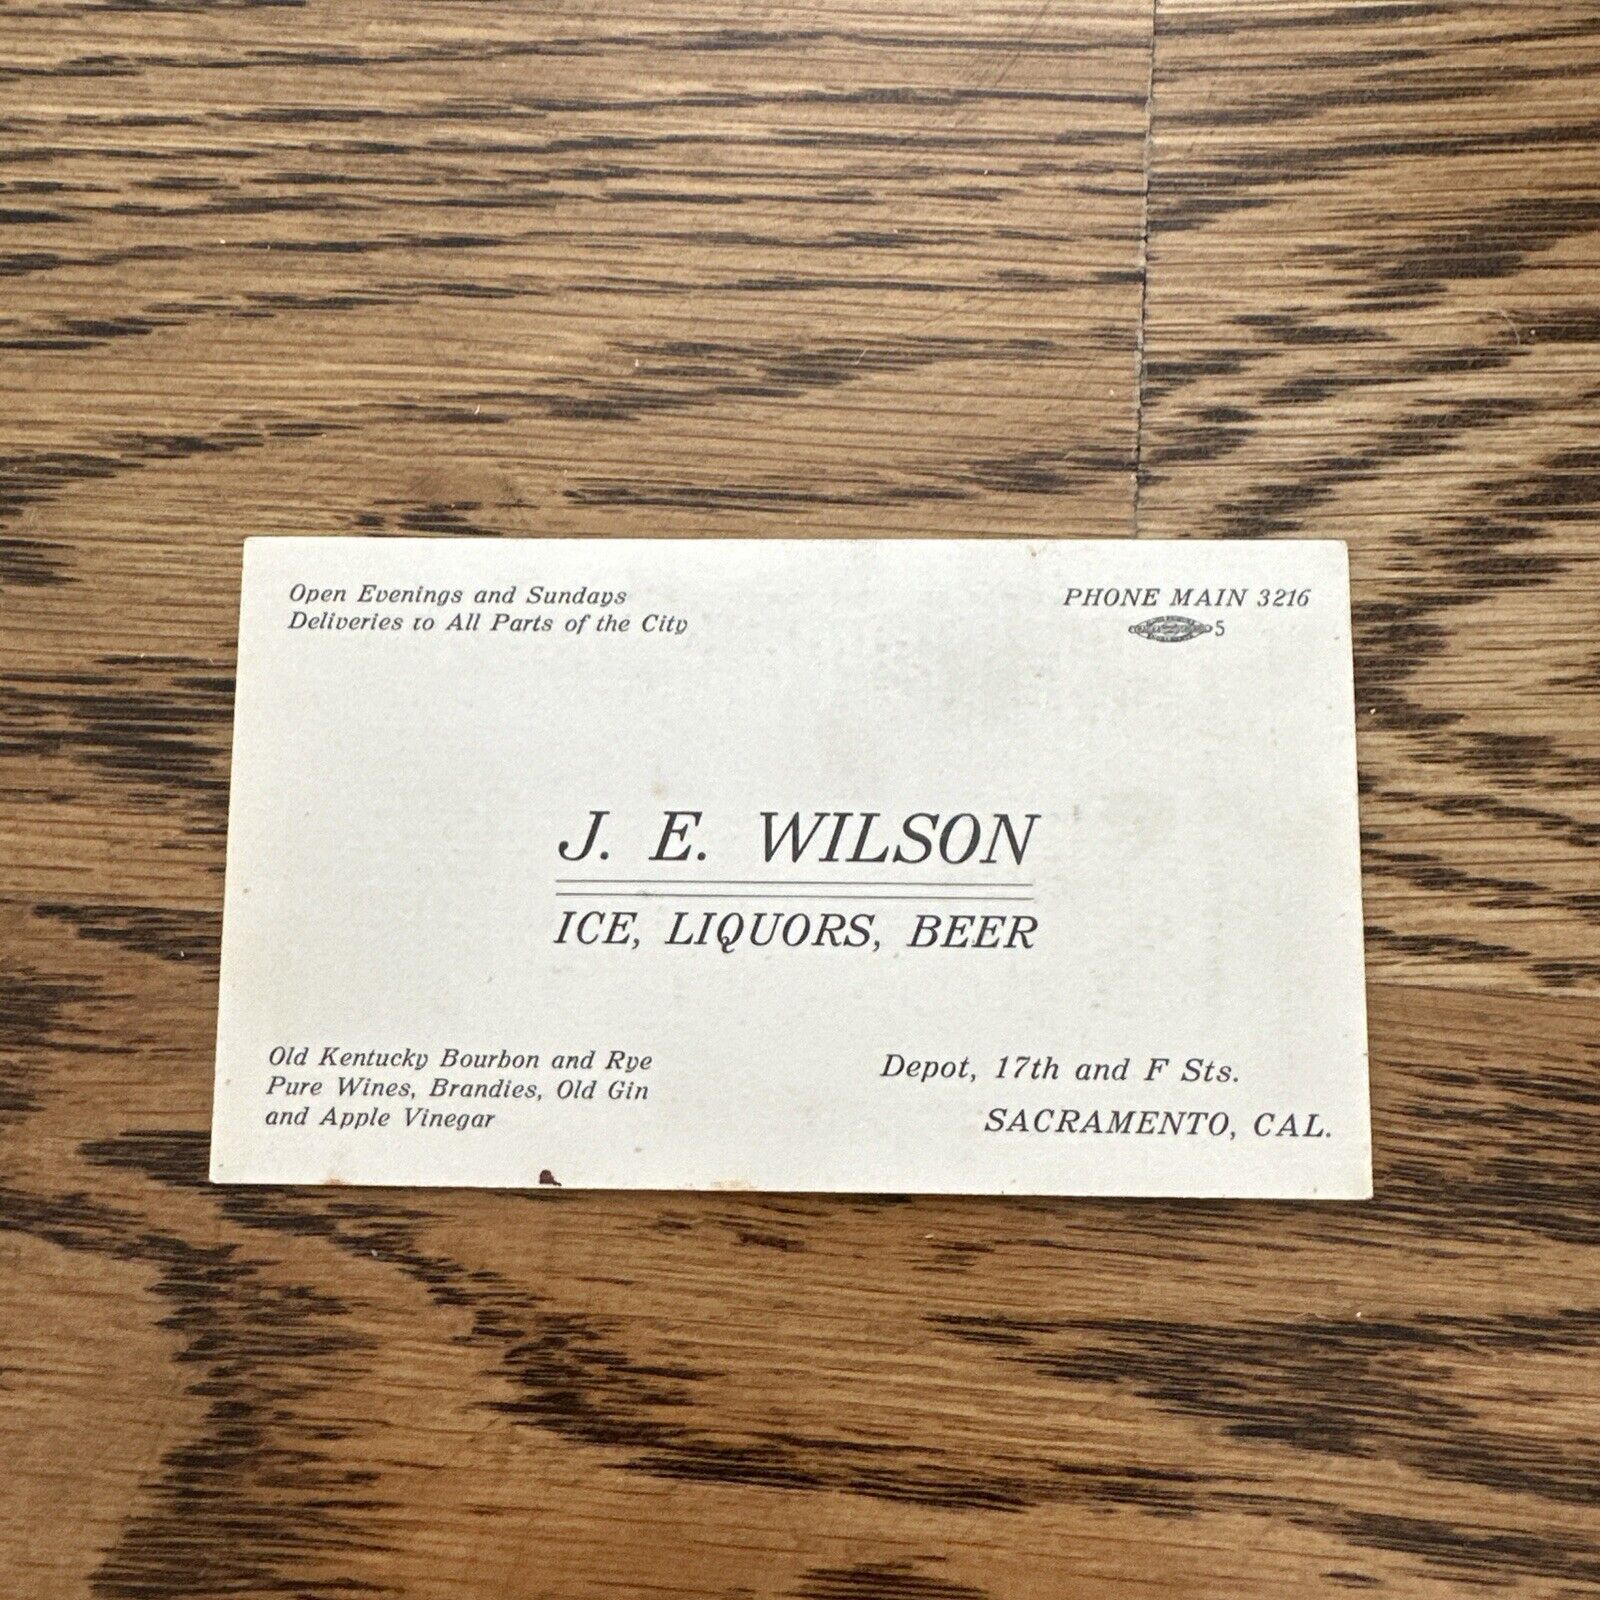 Vintage Business Card 1910s: J.E. Wilson Ice Liquors Beer Sales, Sacramento CA